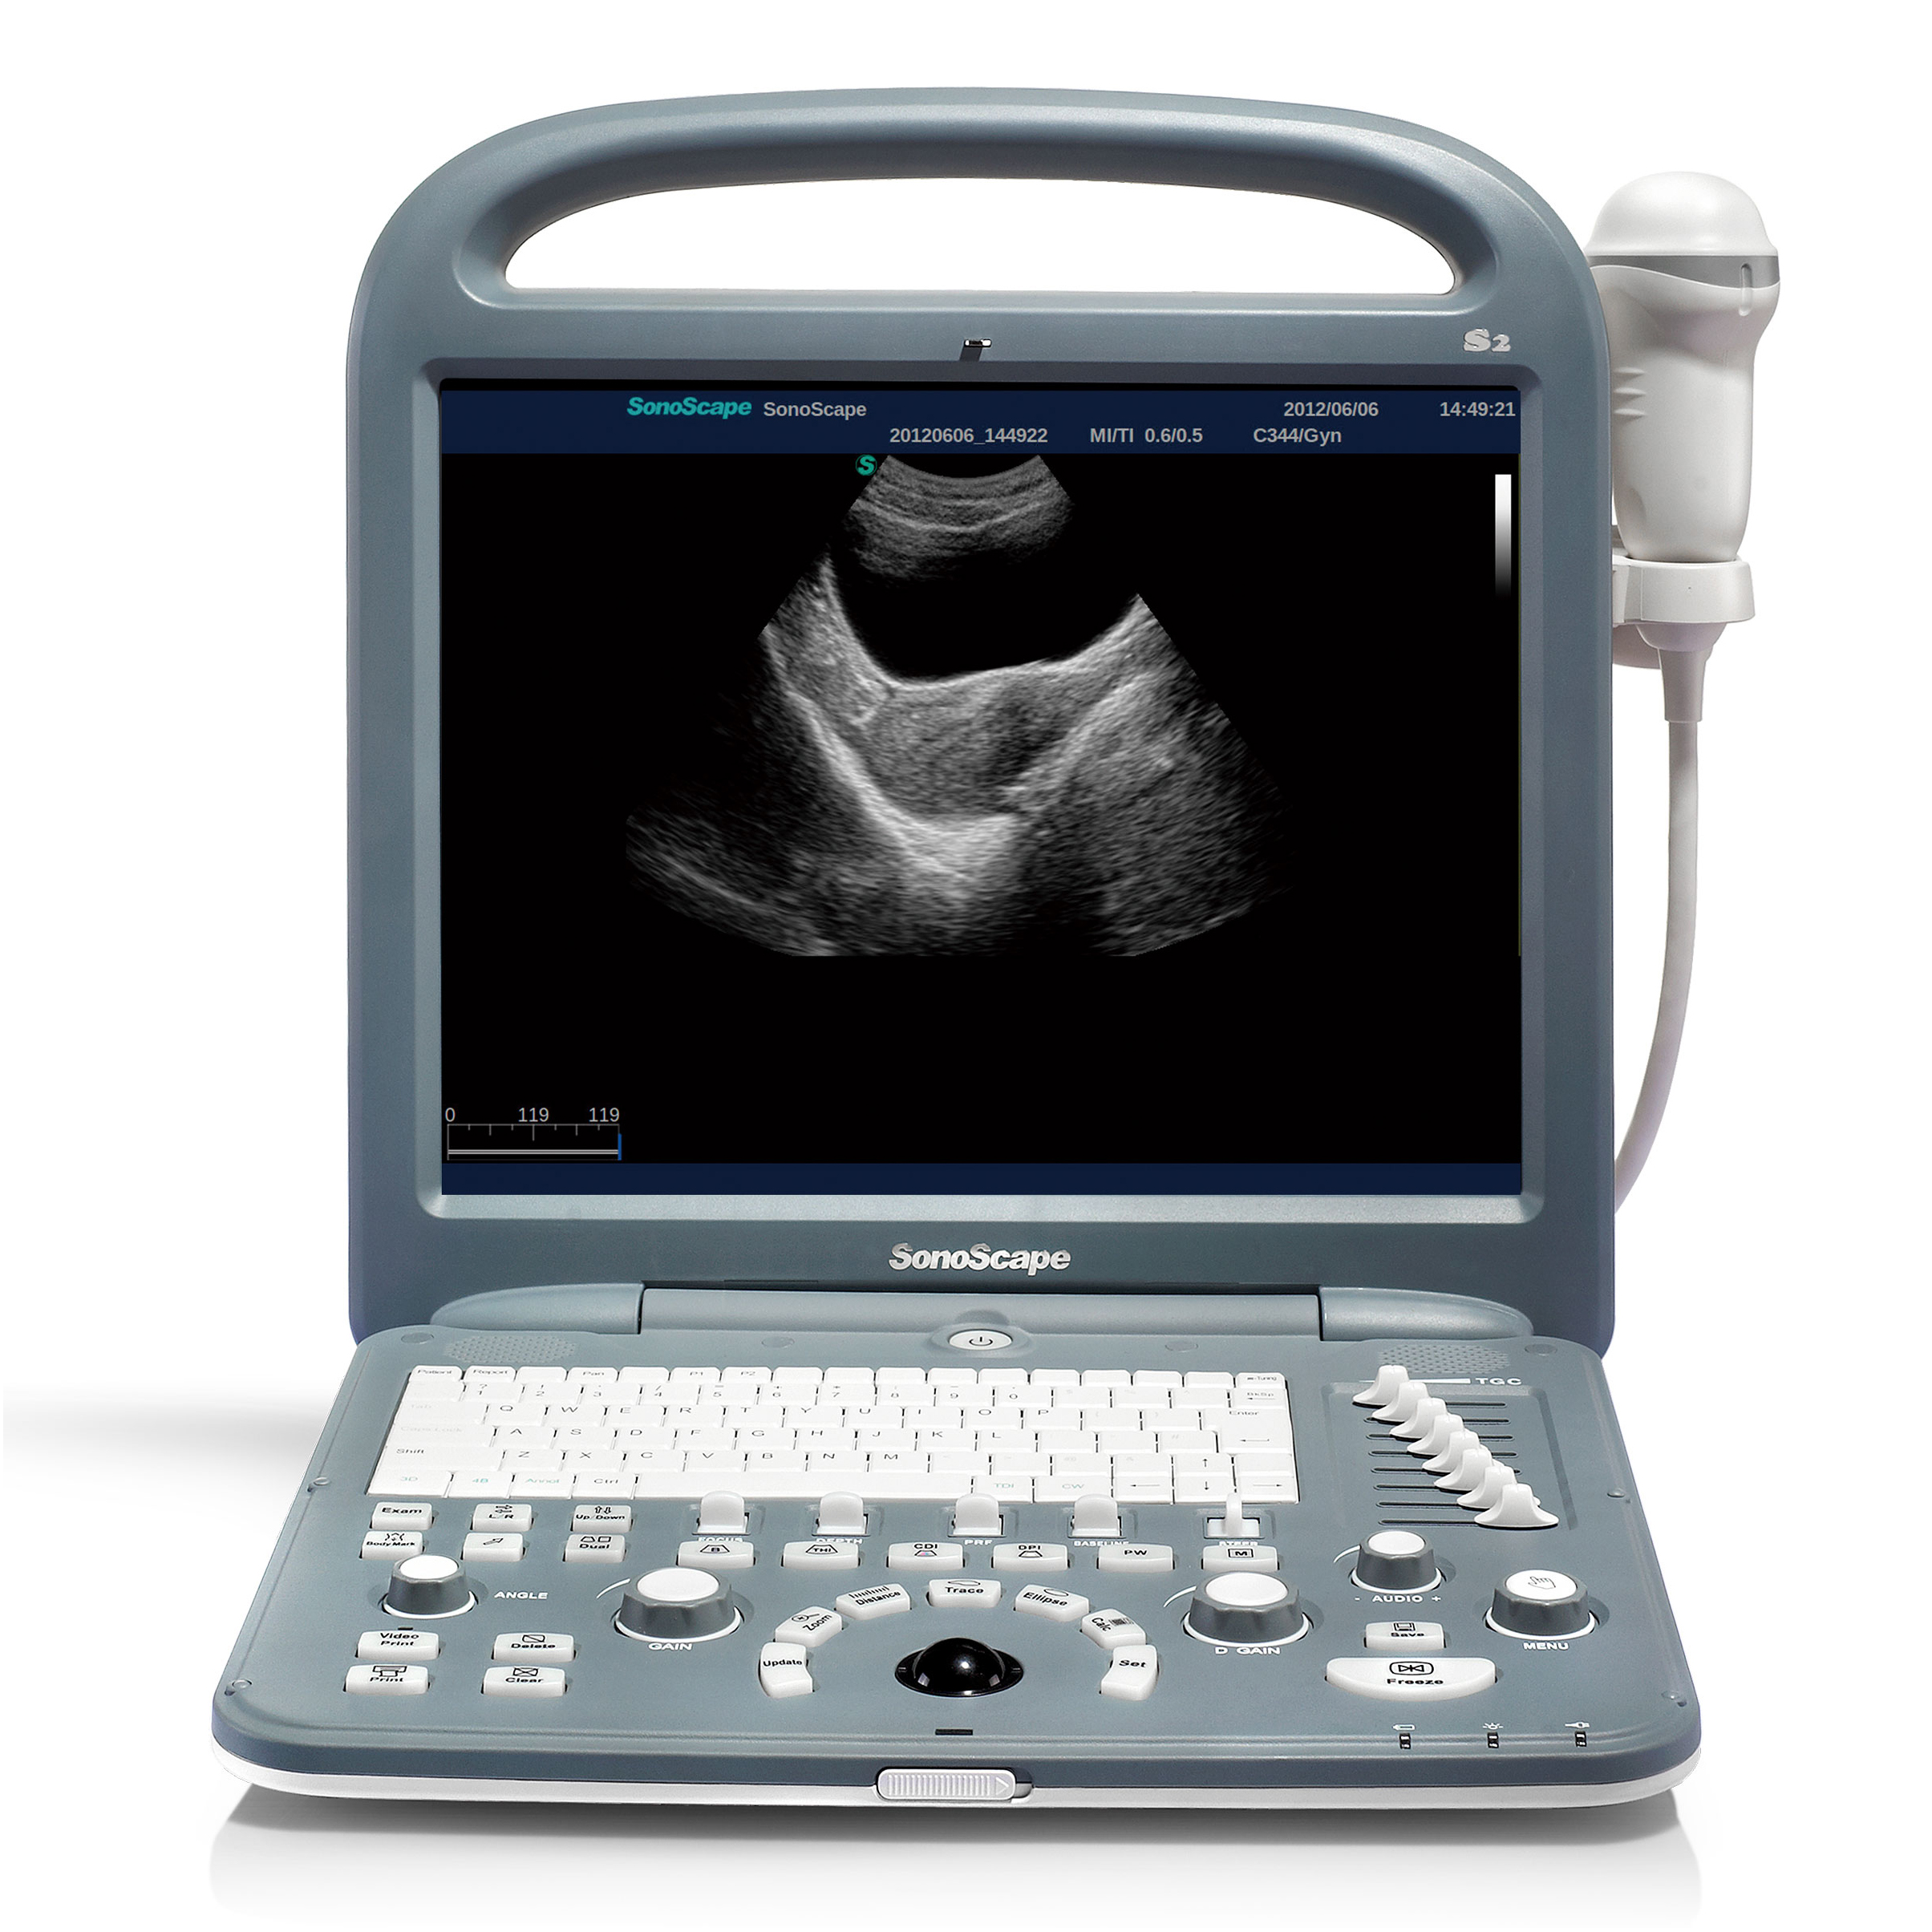 SonoScape S2 CE Approved BW Color Doppler Handheld Vet Use Medical Ultrasound Equipment At a Discount